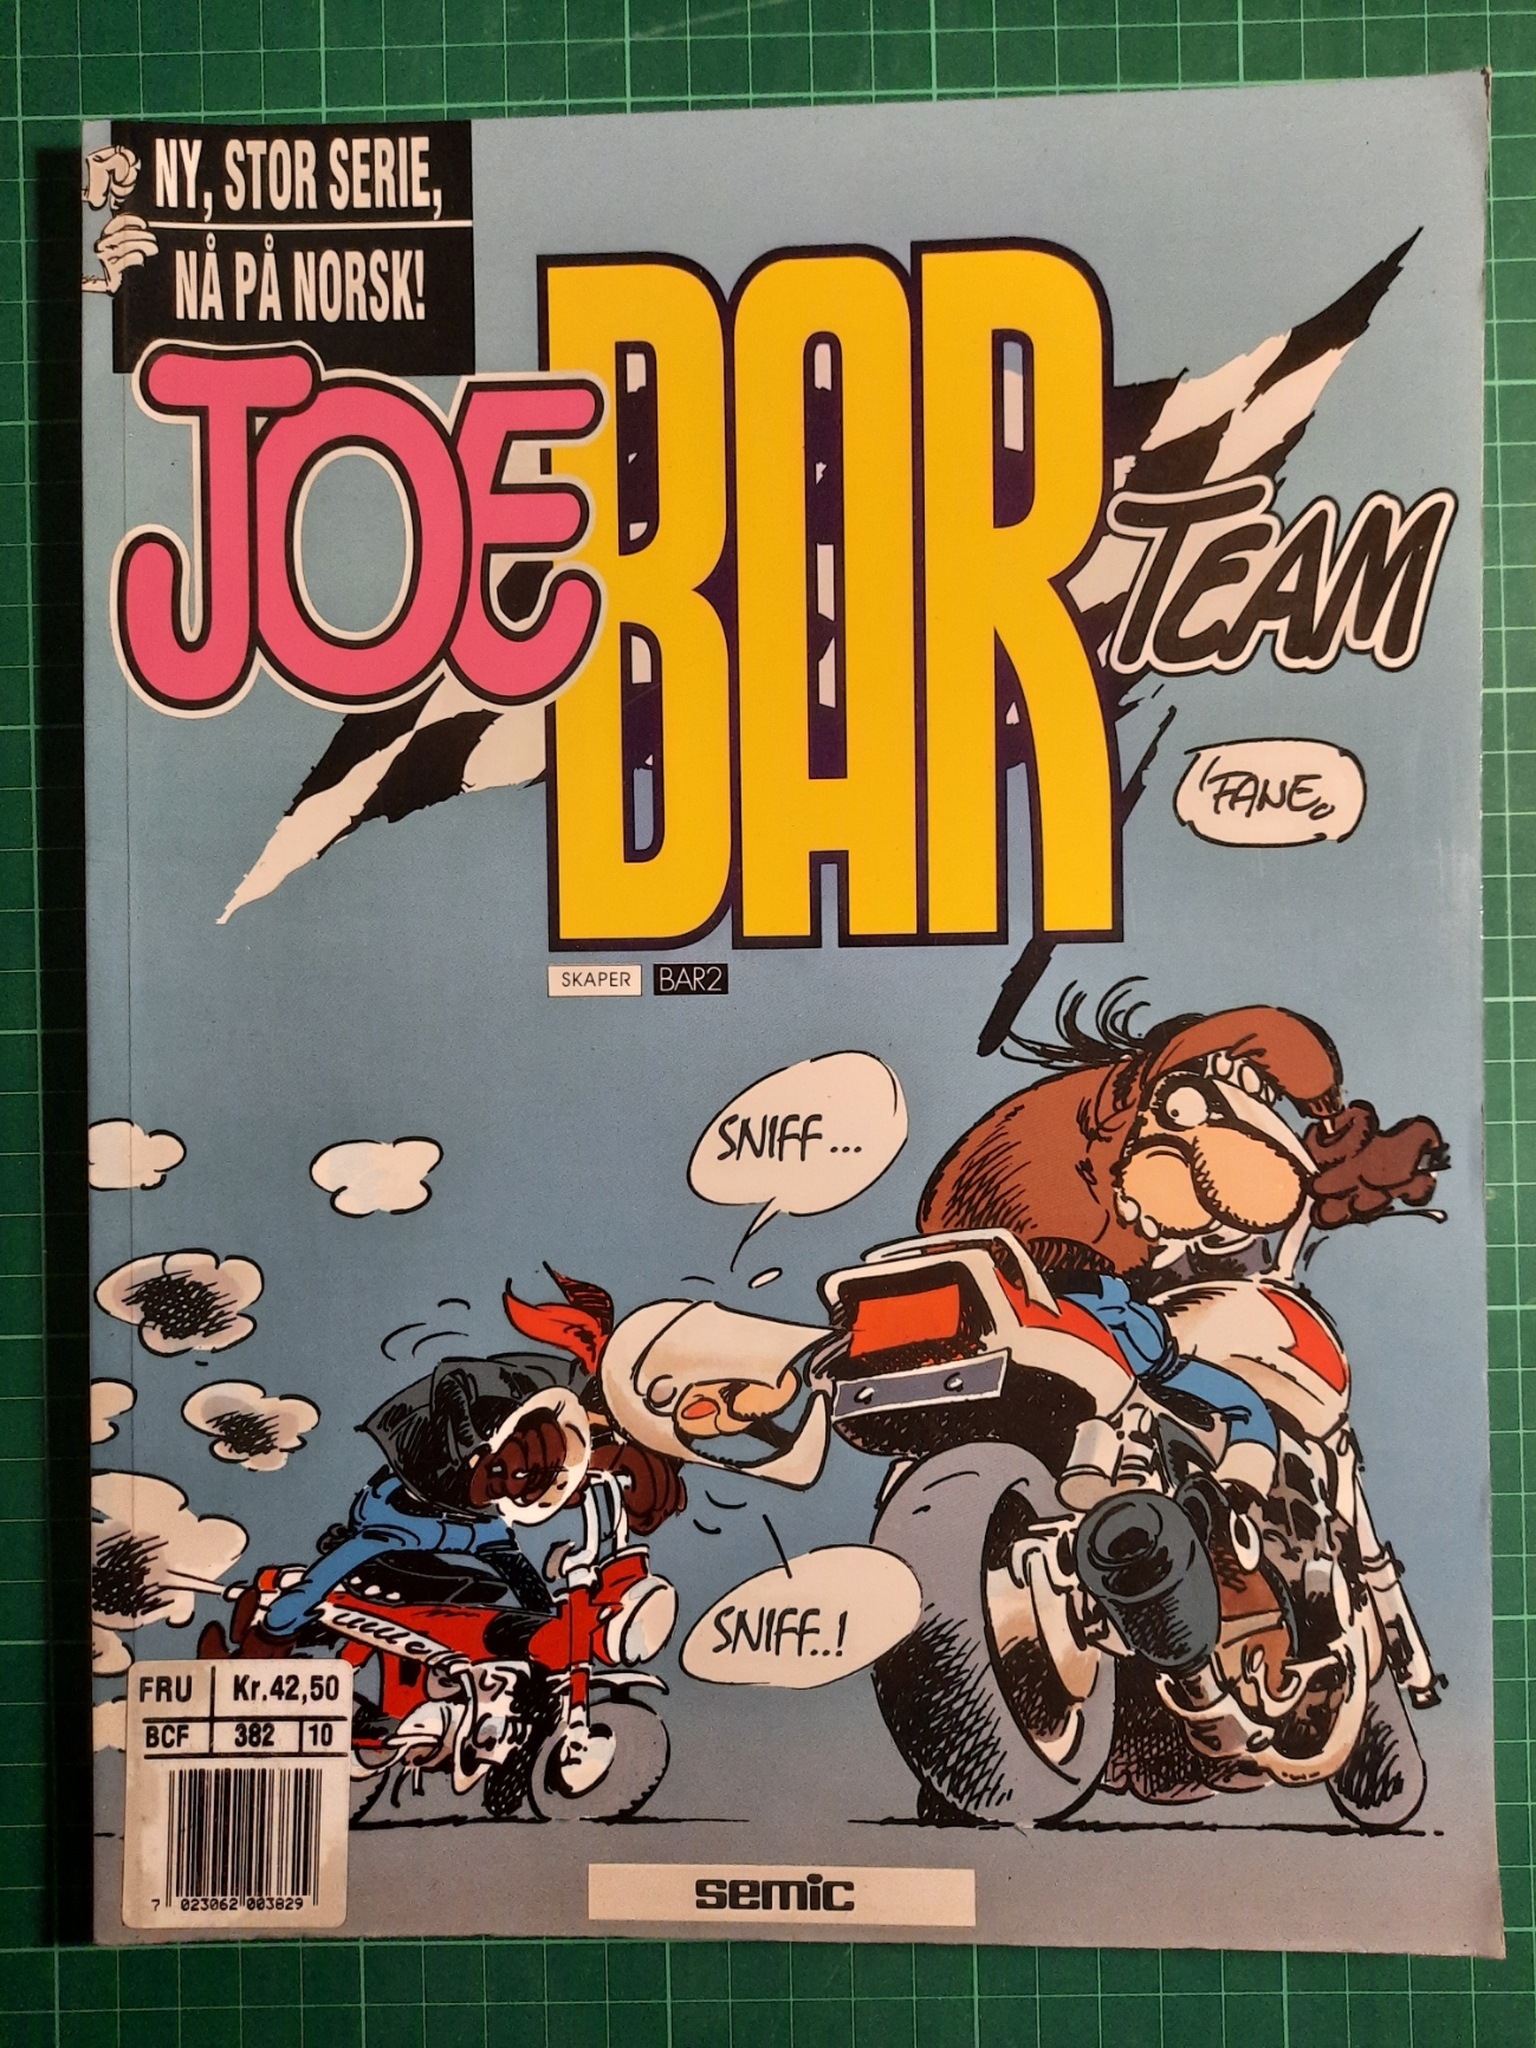 Joe Bar team 1